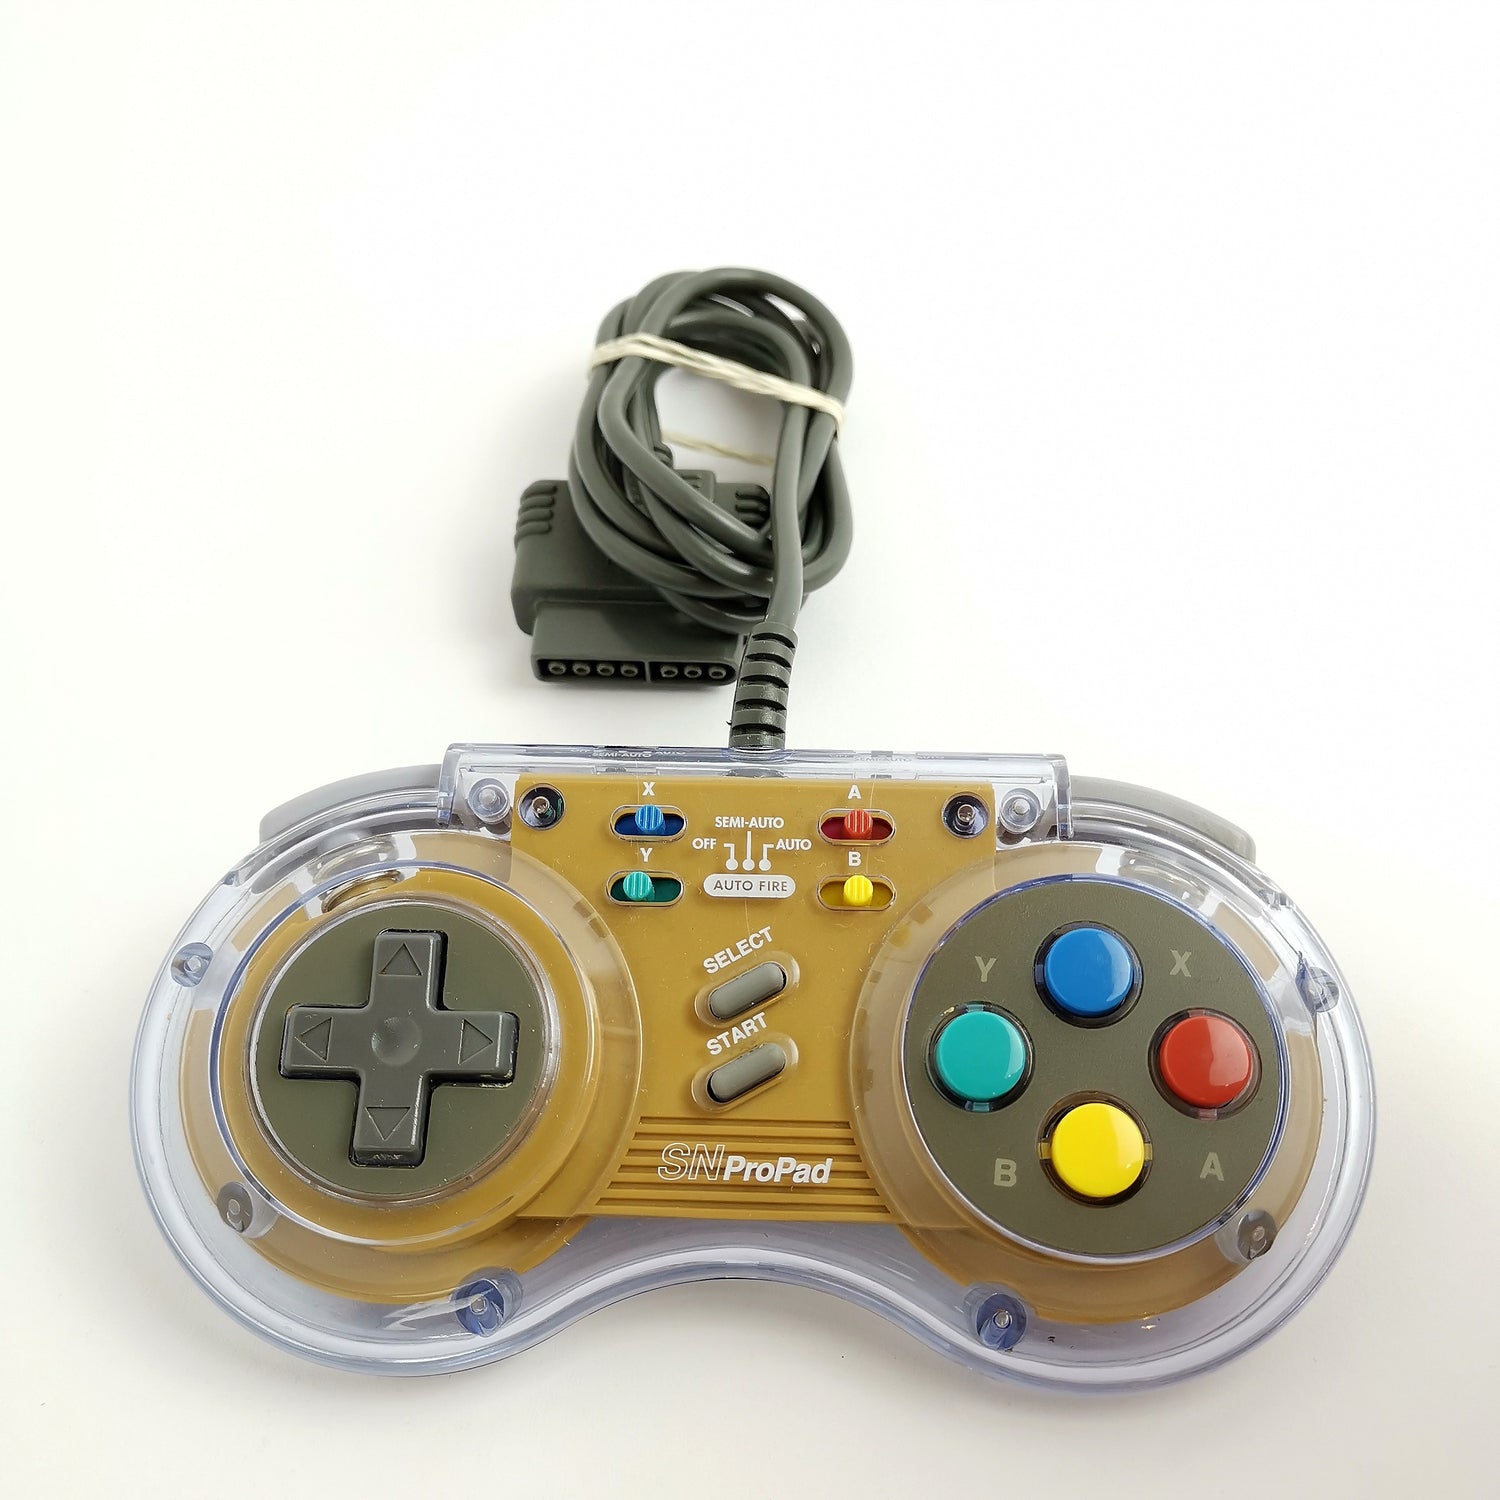 Super Nintendo Zubehör Controller : SN ProPad - Gamepad for SNES | Joypad